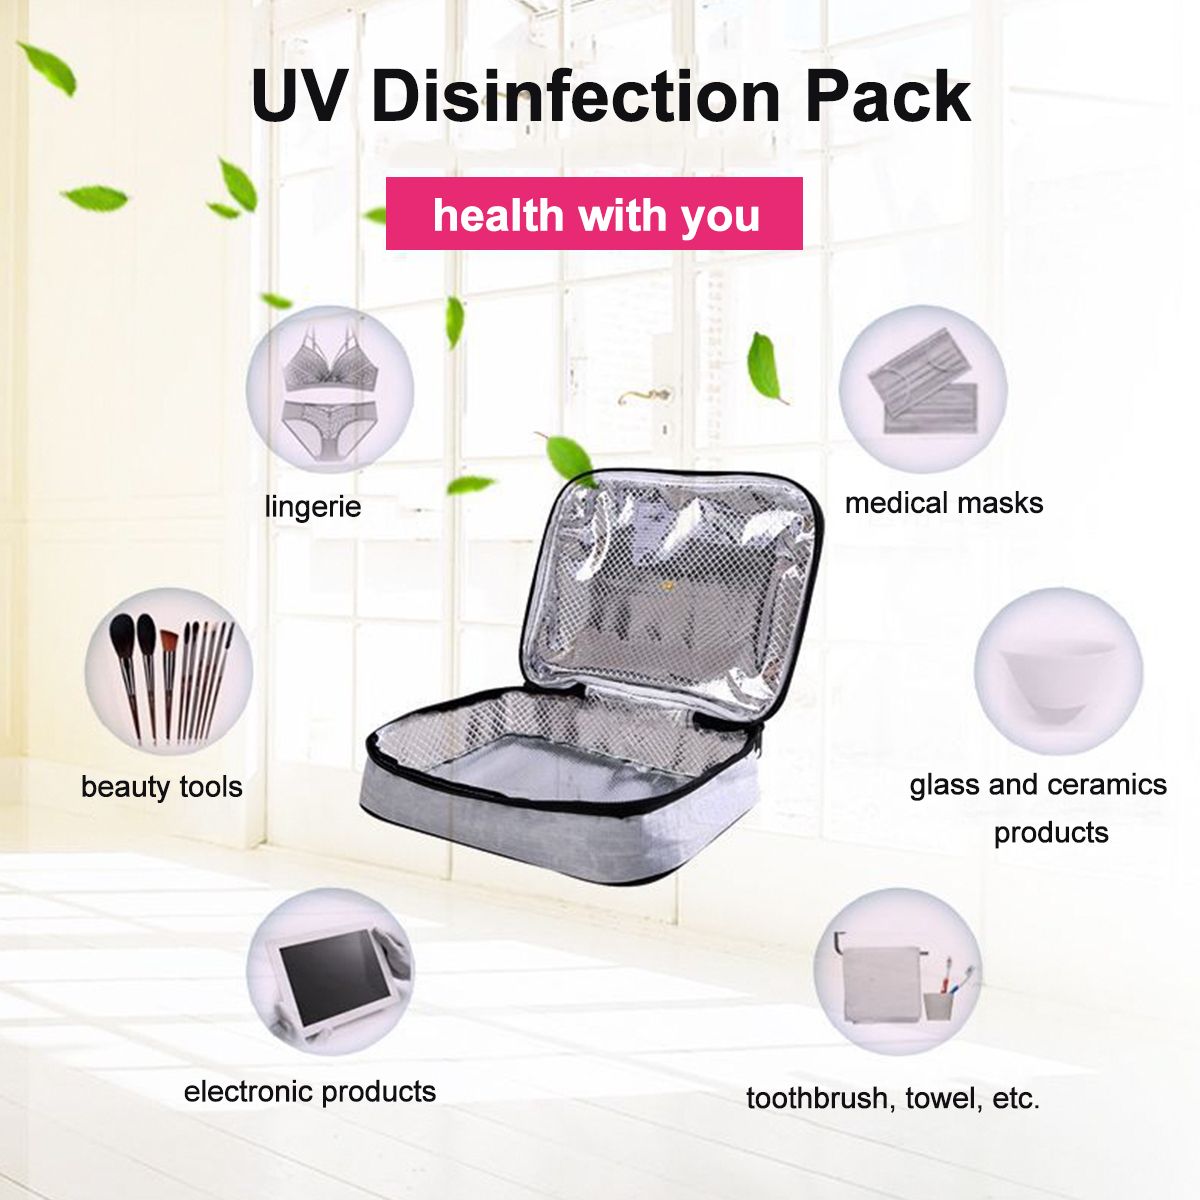 UV-Disinfection-Pack-Baby-Bottle-UnderwearFace-Mask-Supplies-Sterilization-Box-1653035